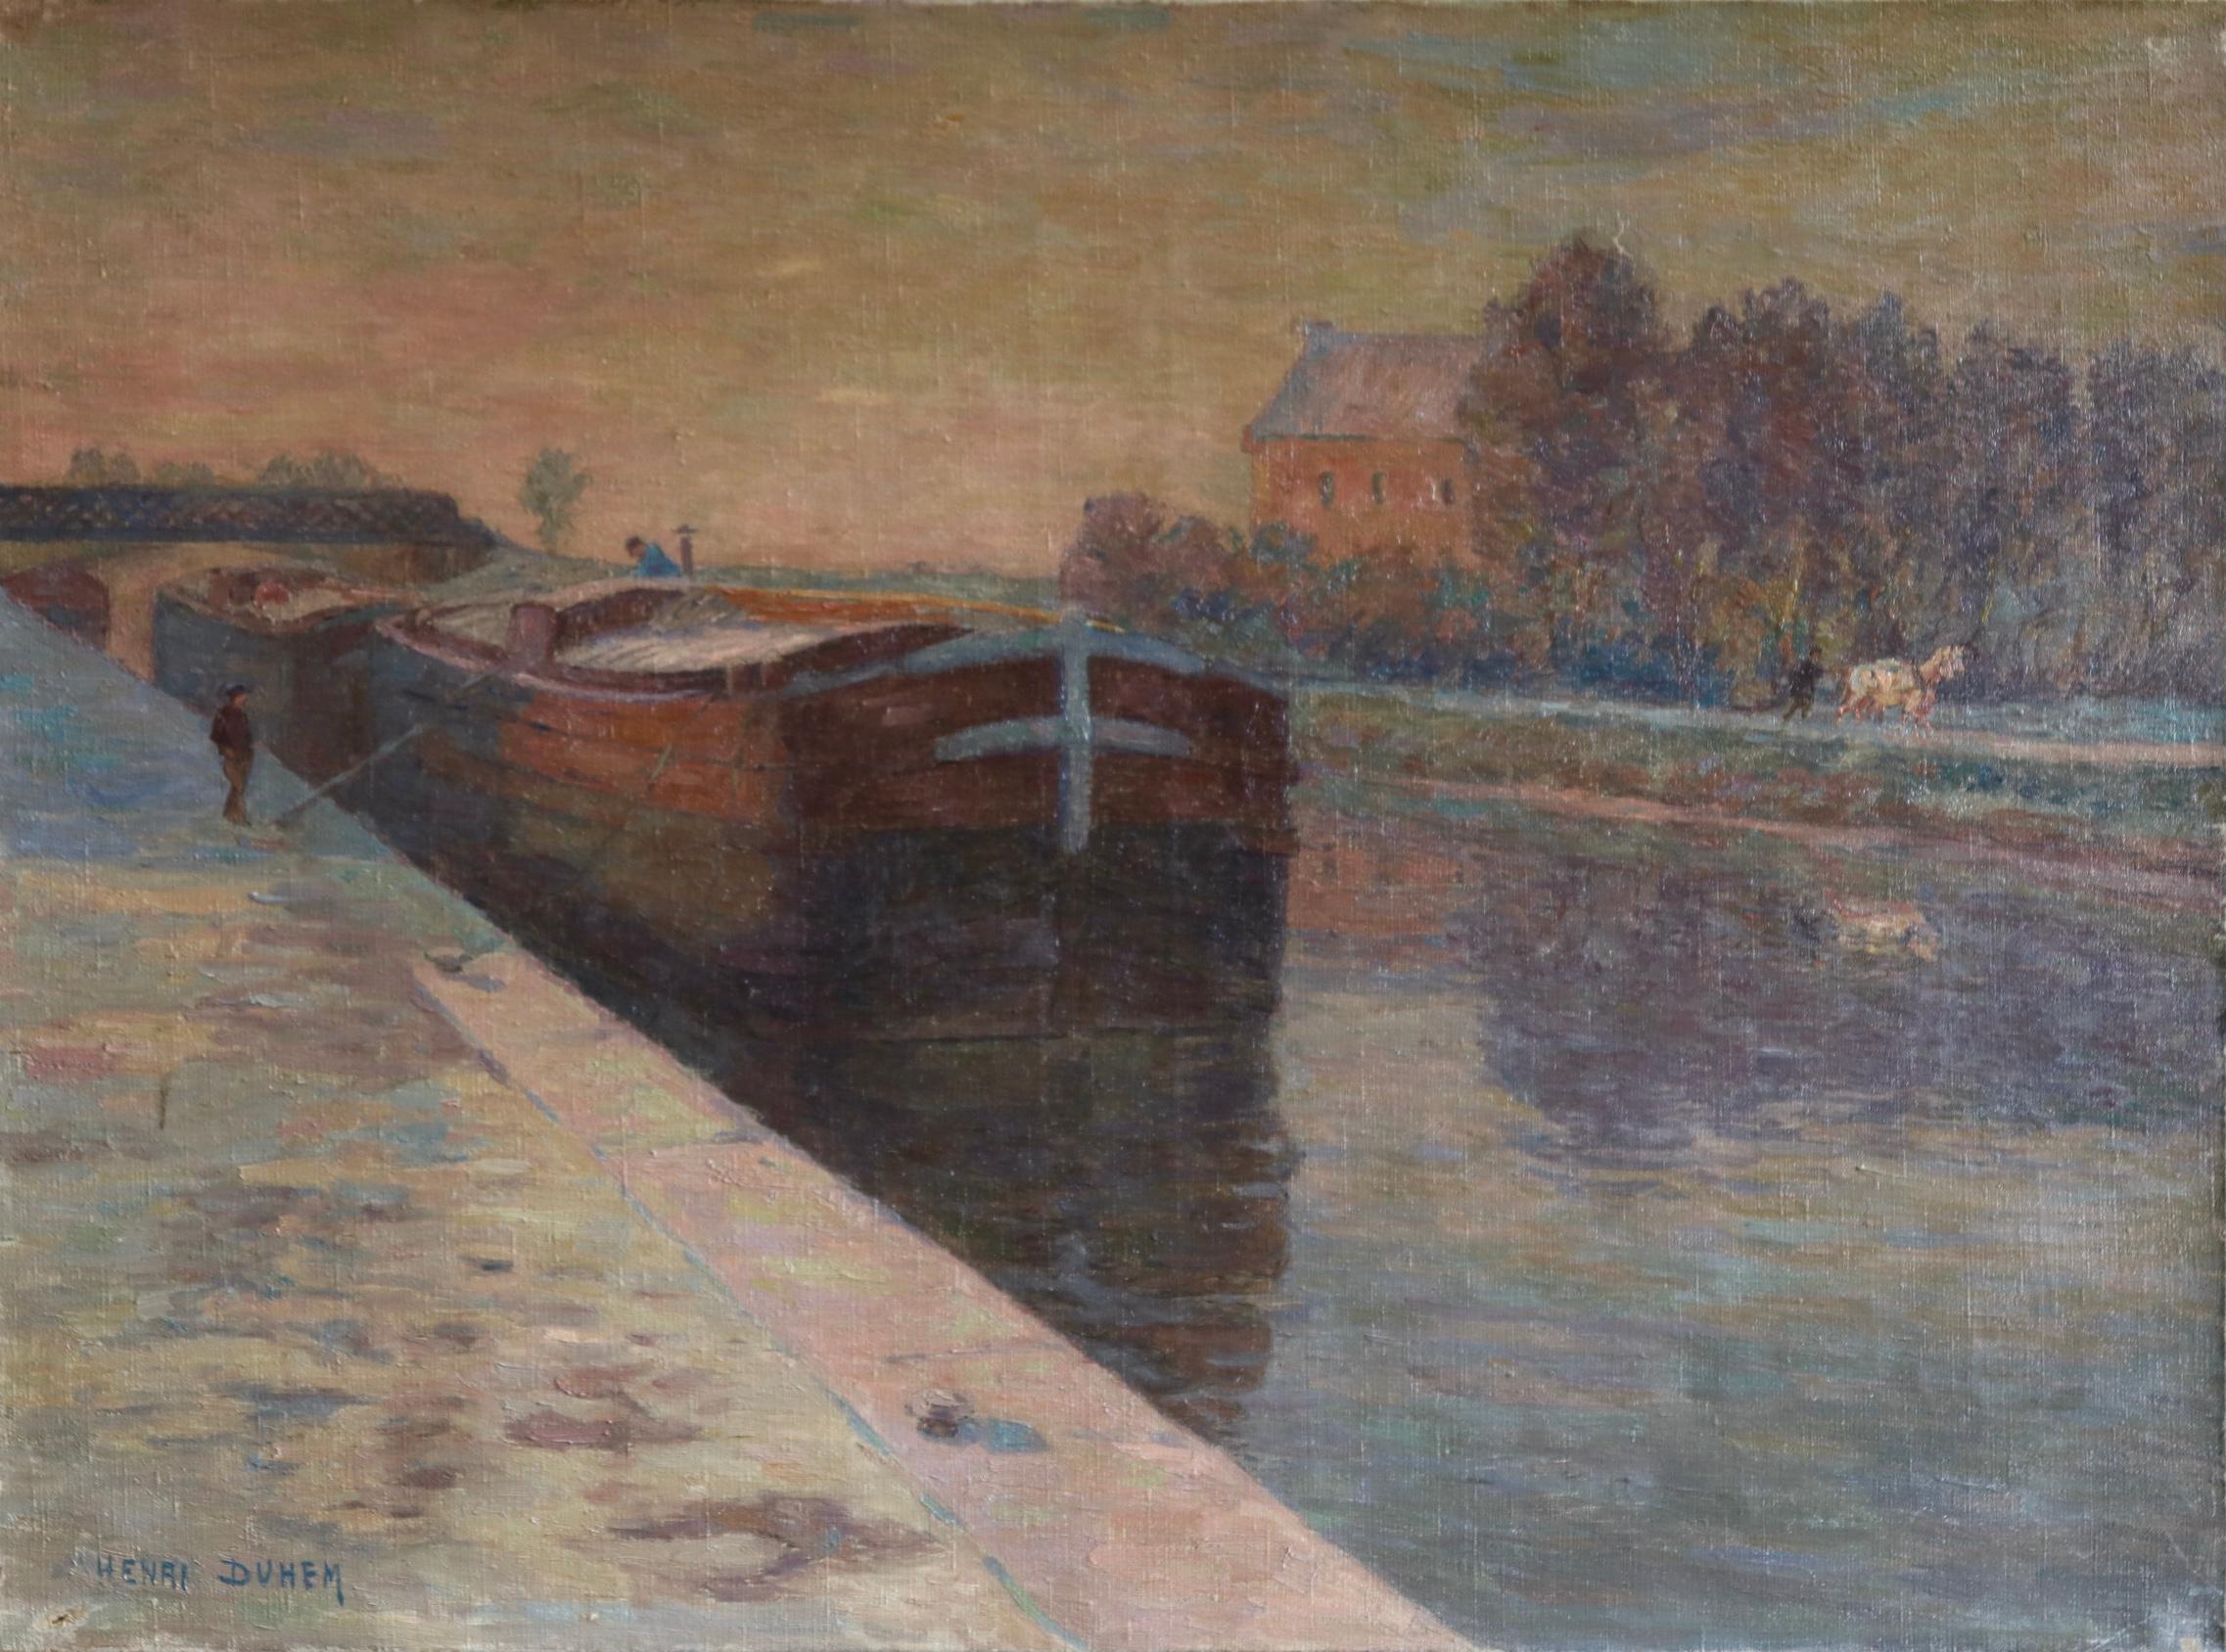 Landscape Painting Henri Duhem - Belandre au Soleil - Matin de Givre - Huile impressionniste, paysage de H Duhem